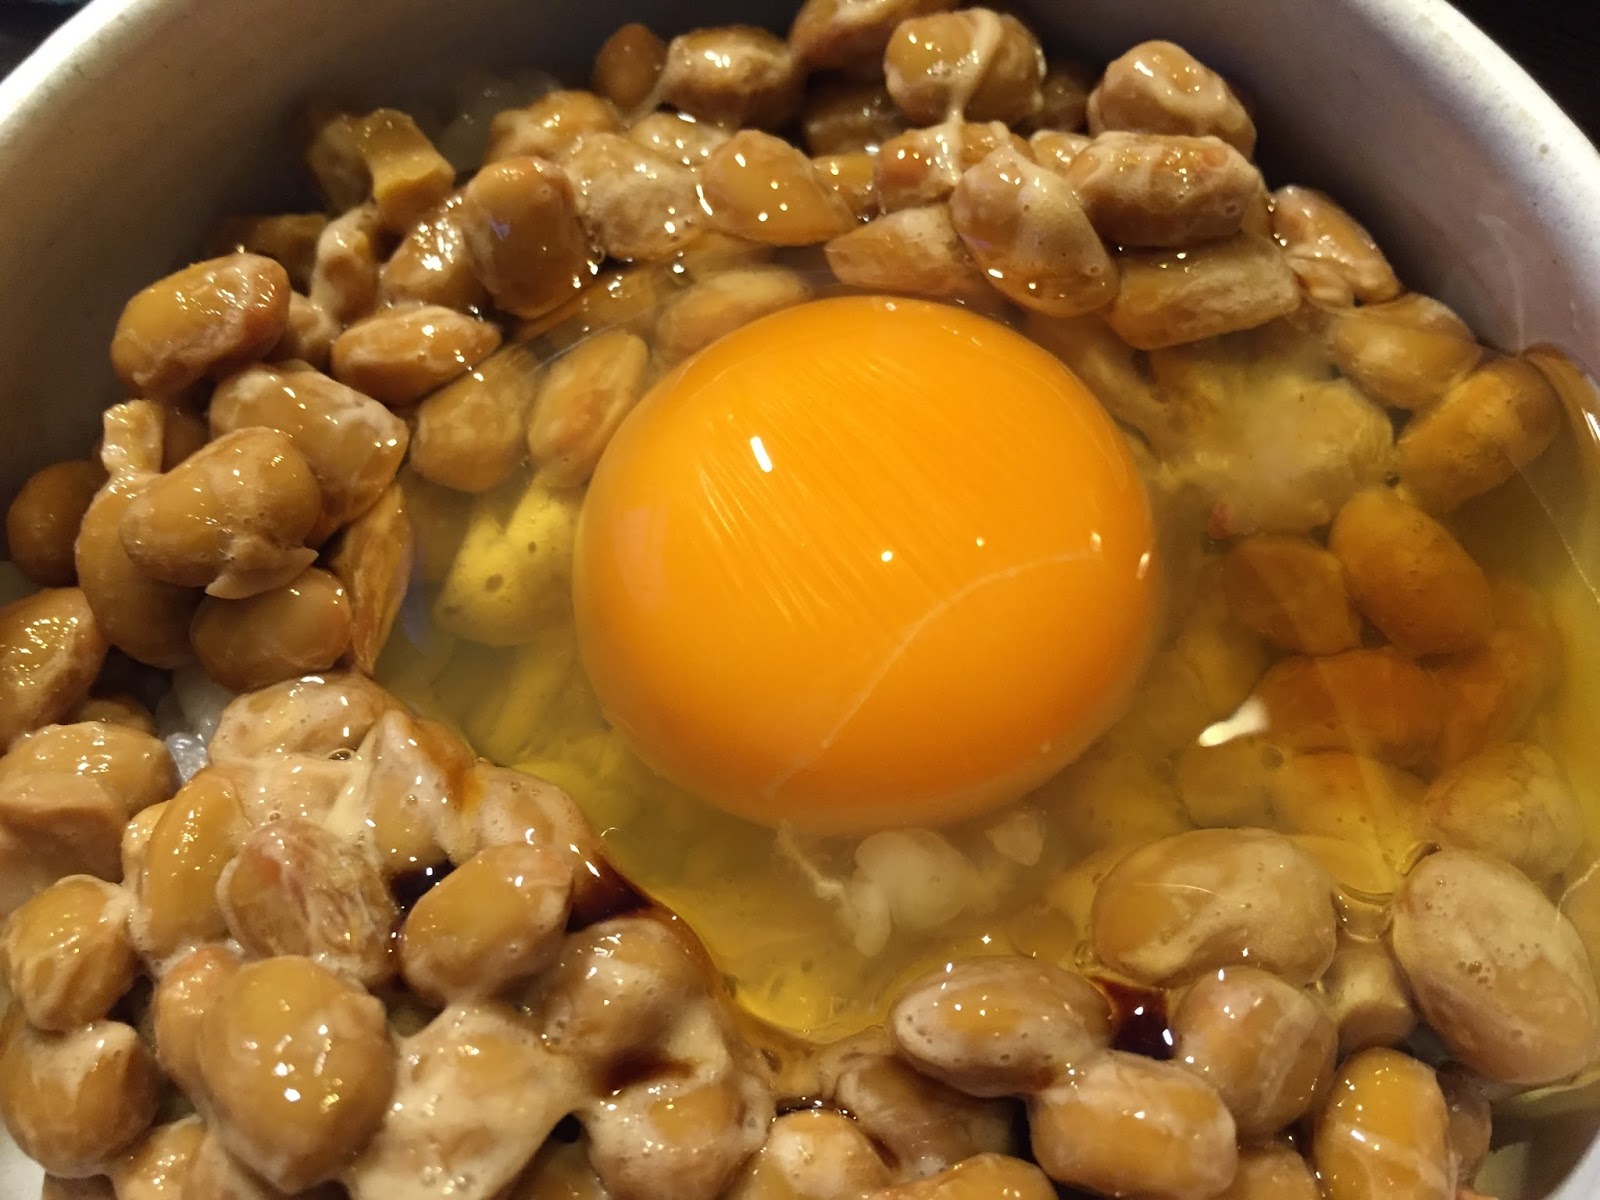 14zawa Blog 雑談 生卵の組み合わせ食材は何が一番 そして生卵の栄養素と効果は